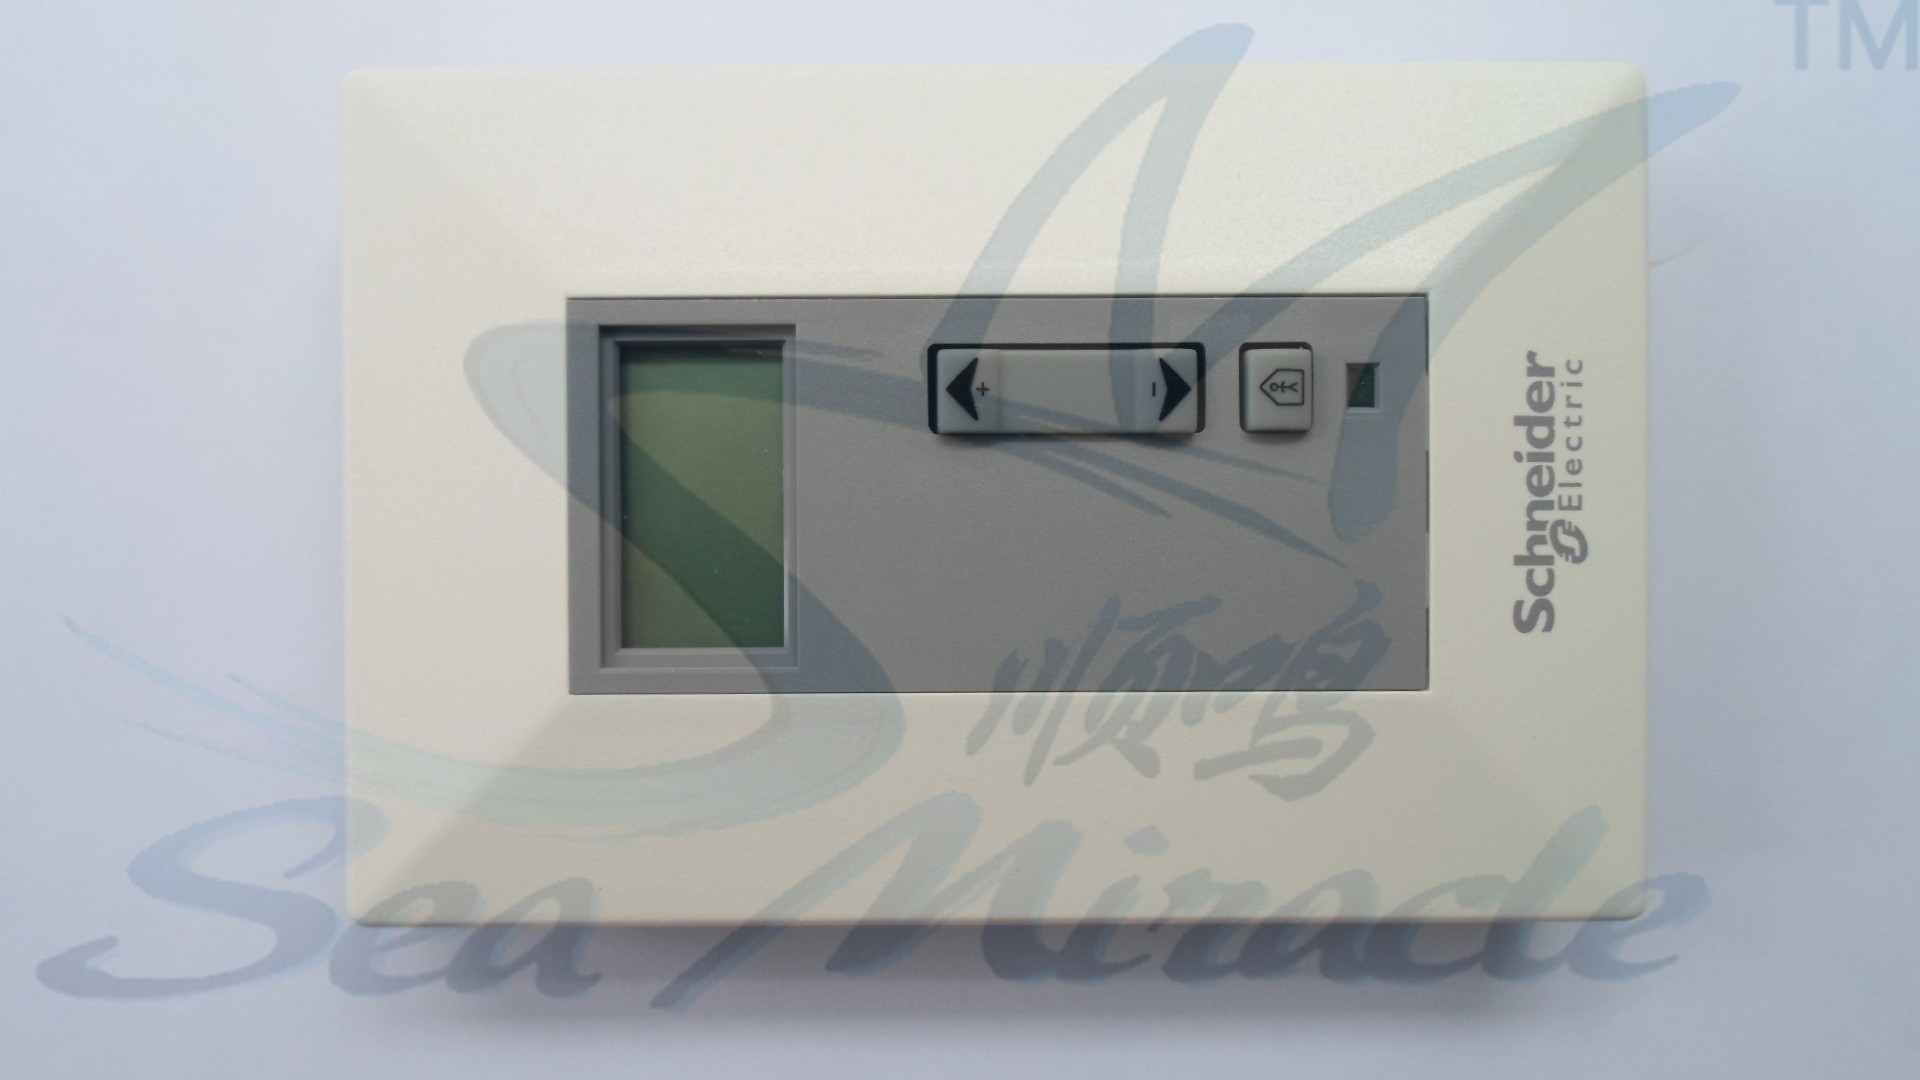 Schneider Electric/施耐德 MN-S3 墙面安装温度传感器